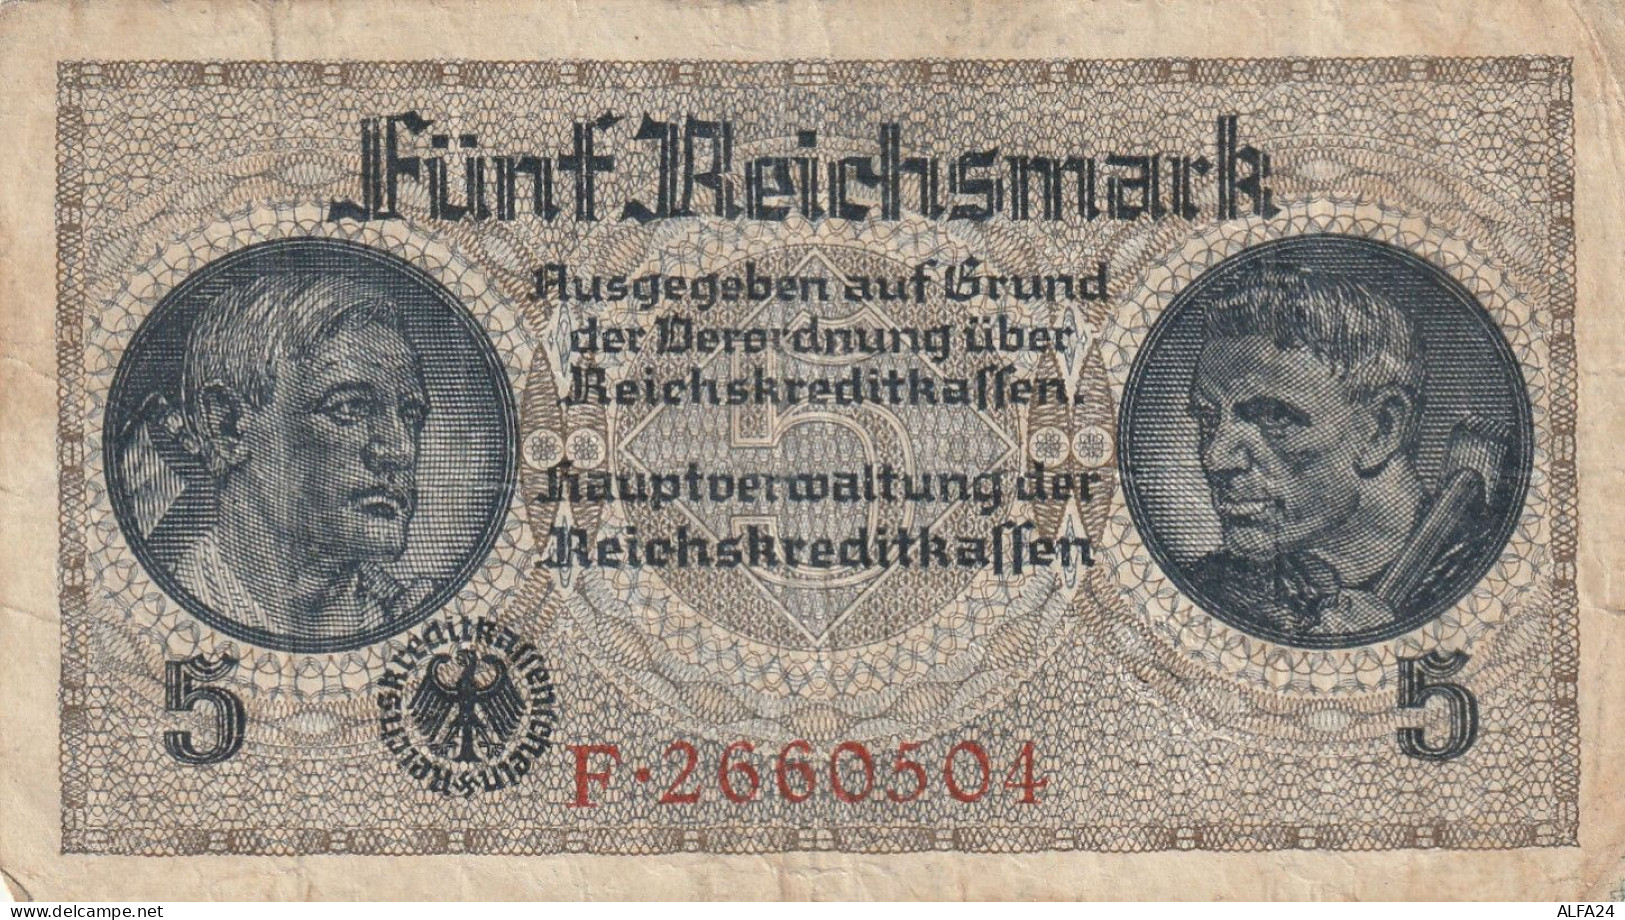 BANCONOTA GERMANIA 5 REICHSMARK VF  (B_80 - 5 Reichsmark